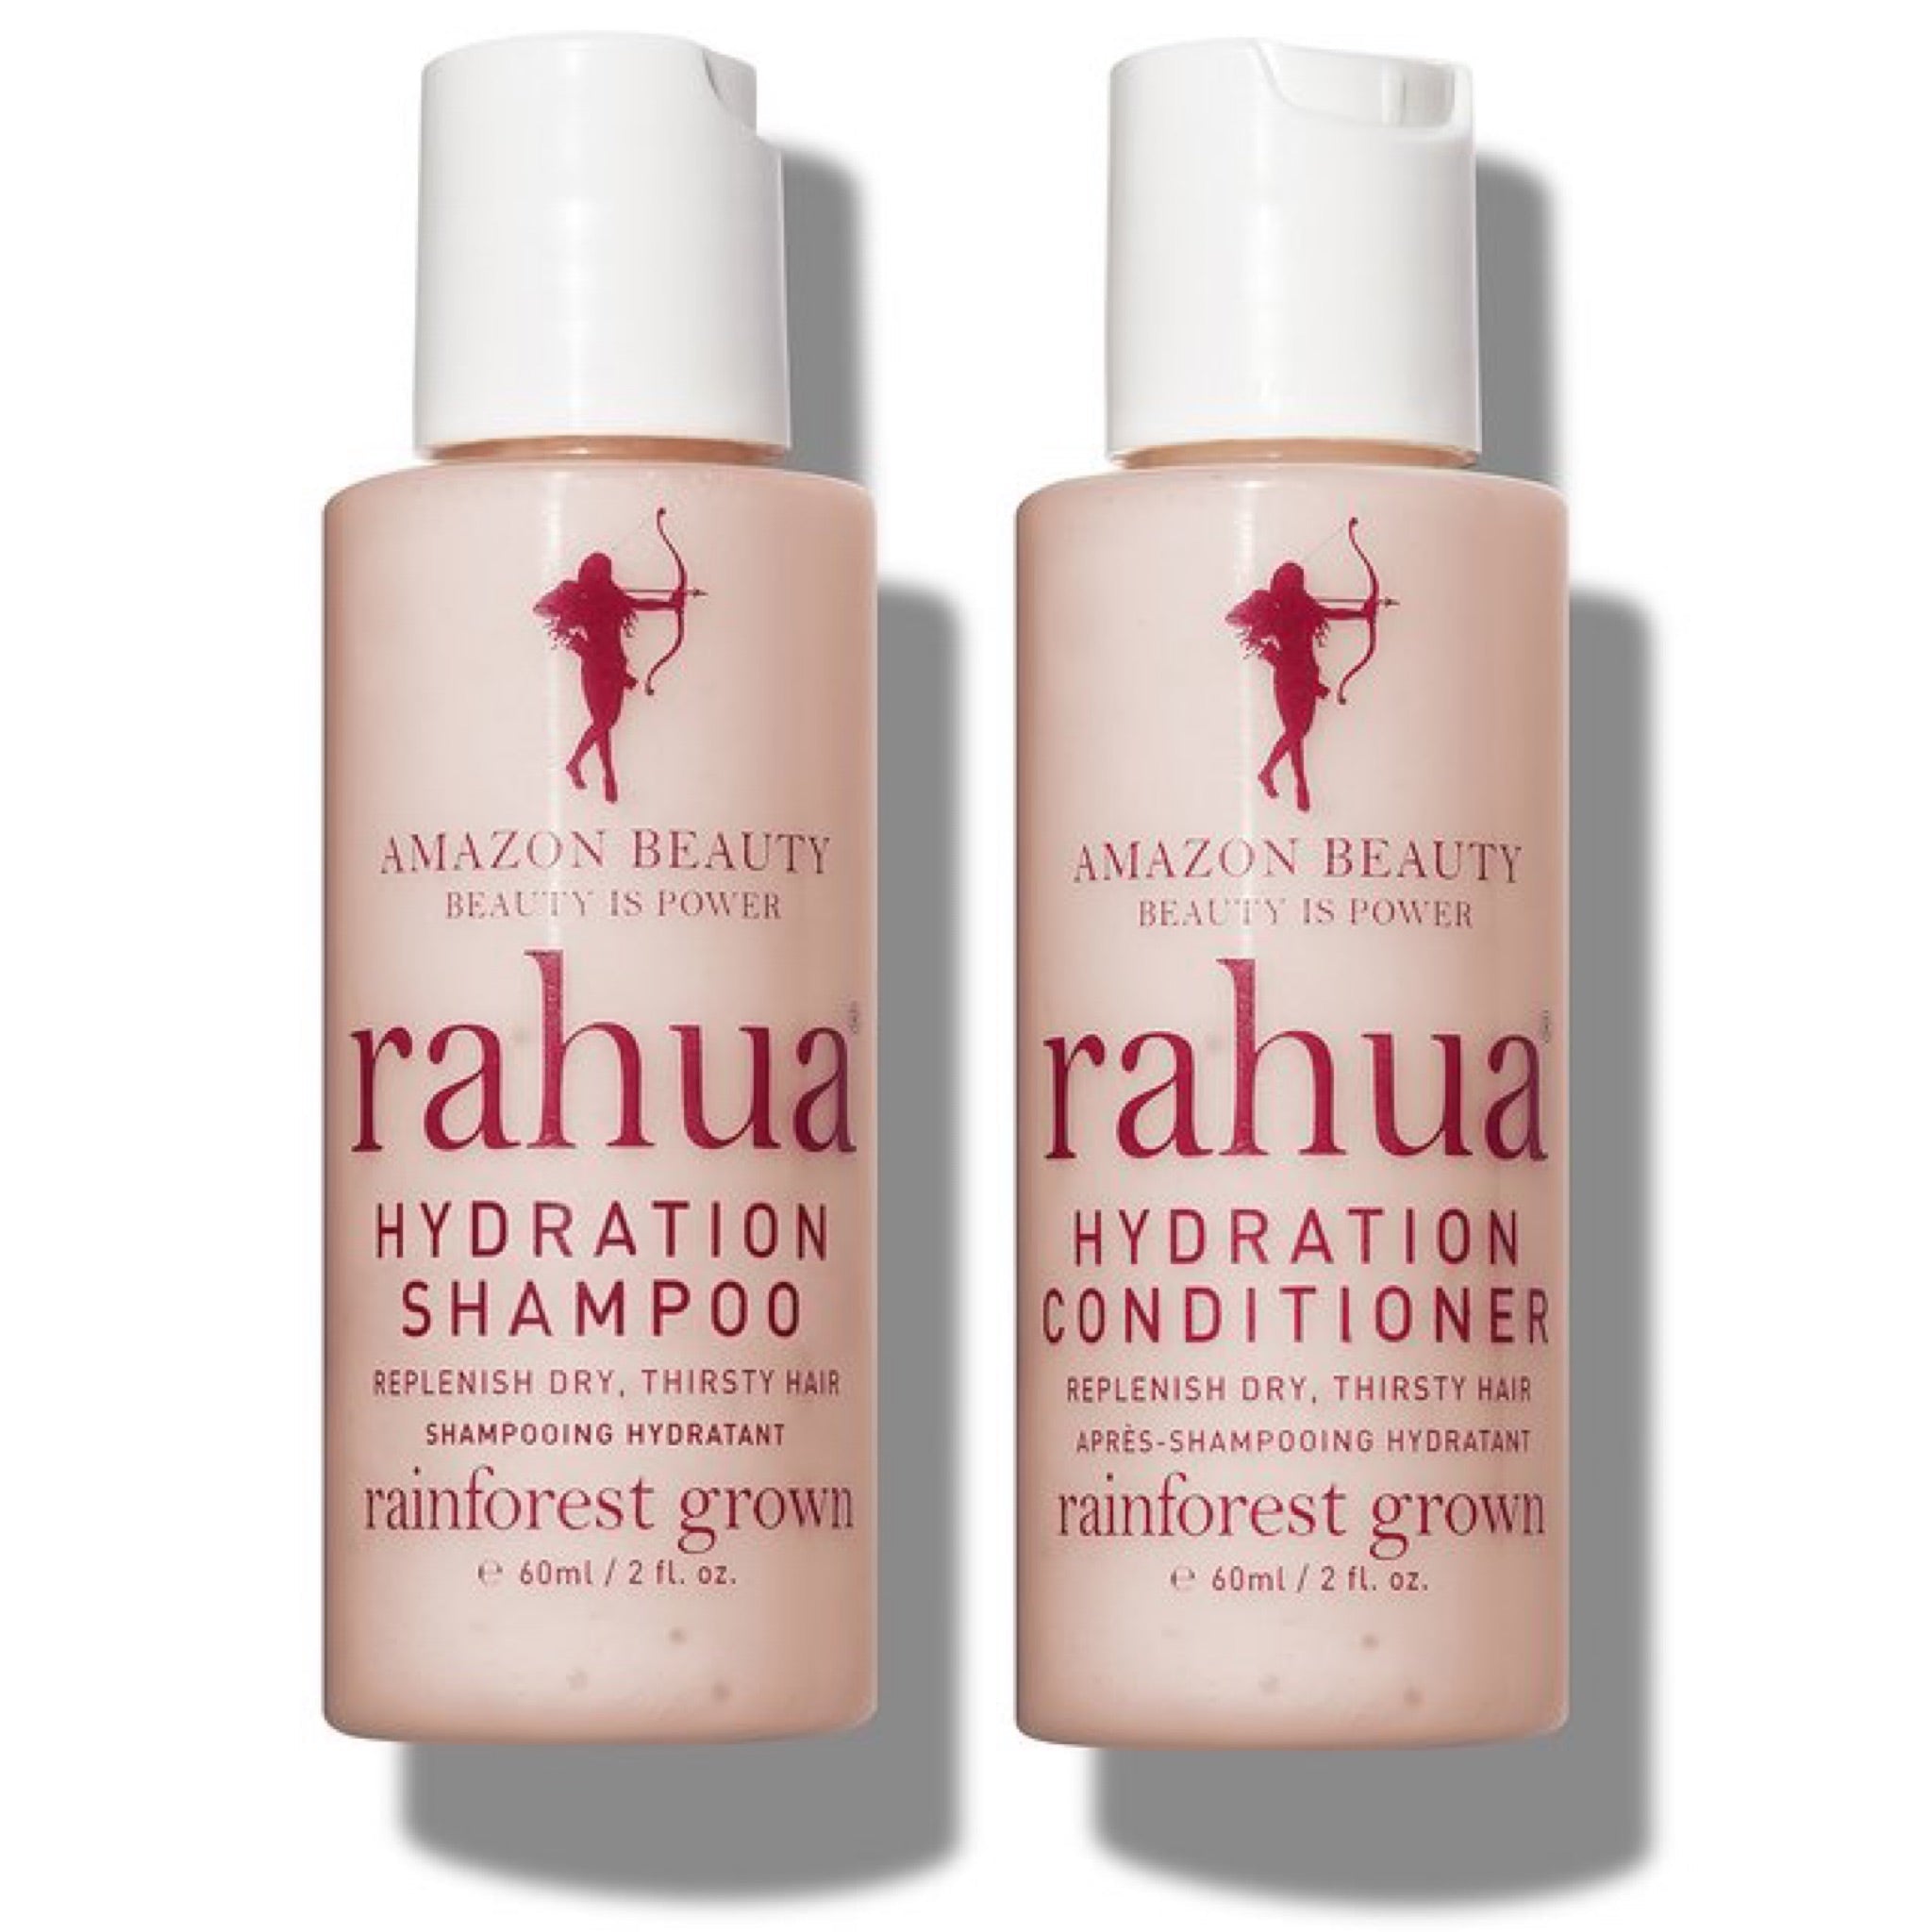 ordbog program Fantastiske Rahua Hydration Shampoo + Conditioner - Safe & Chic